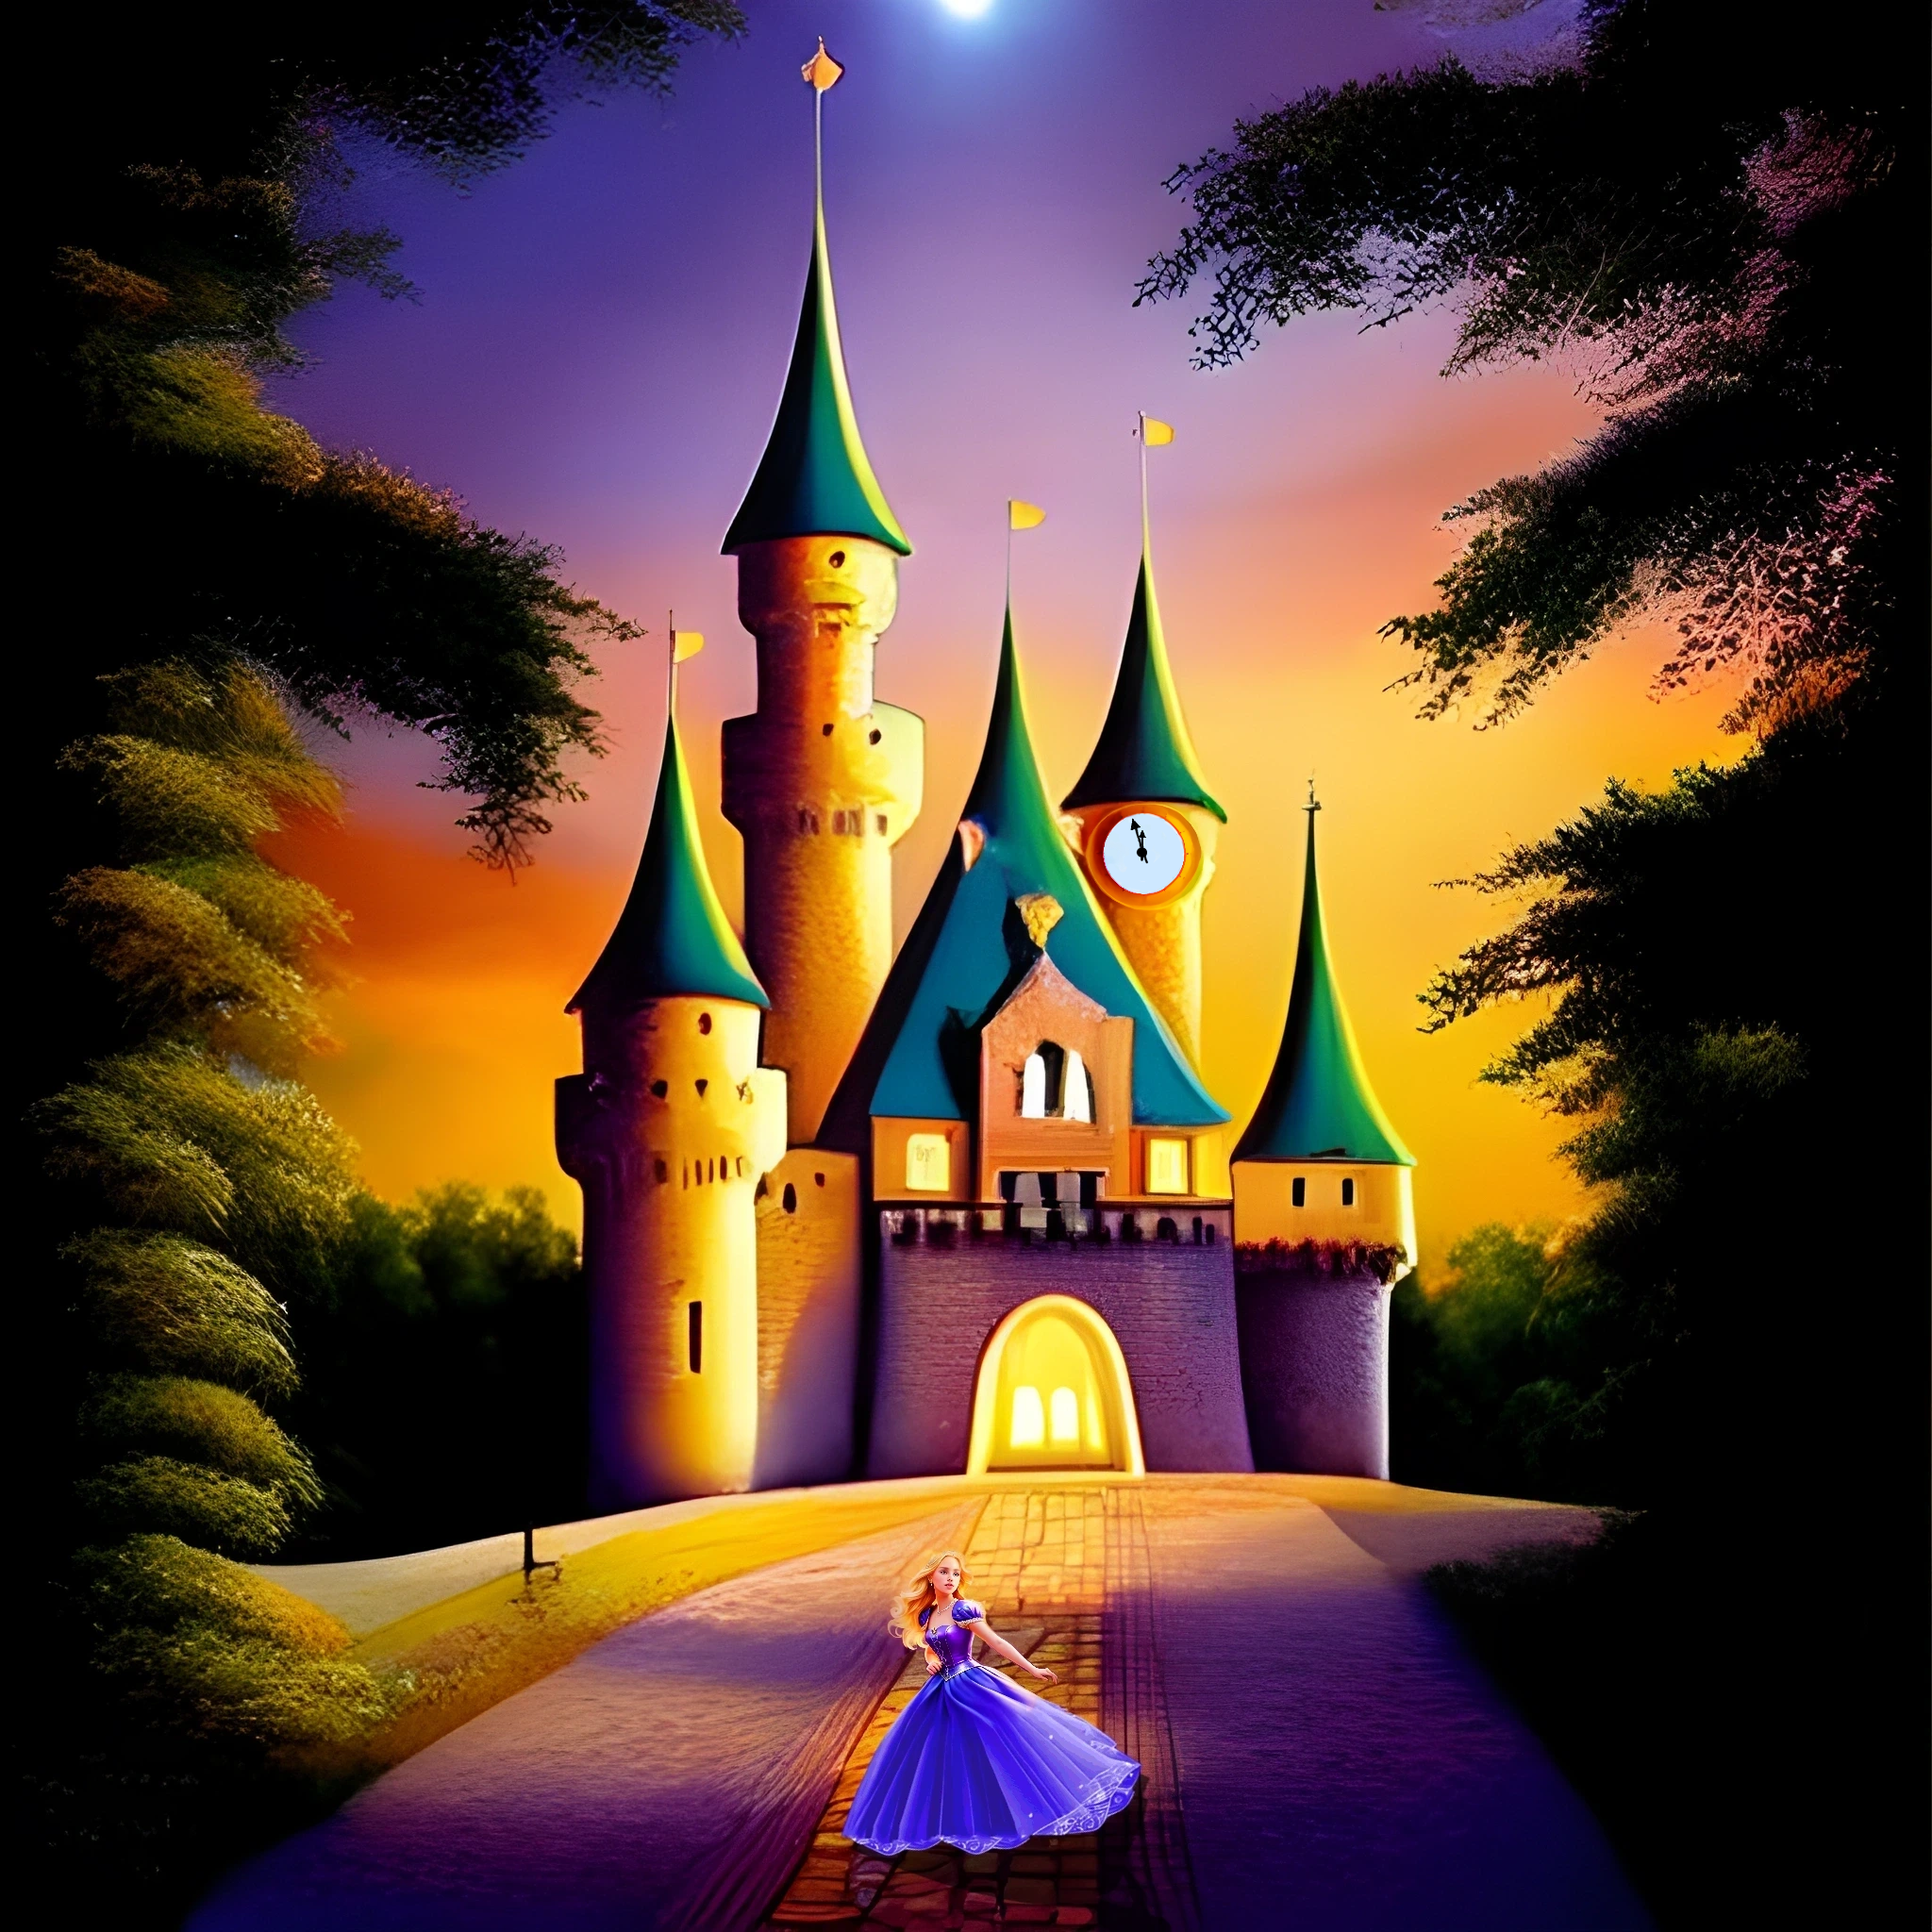 Cinderella running from castle